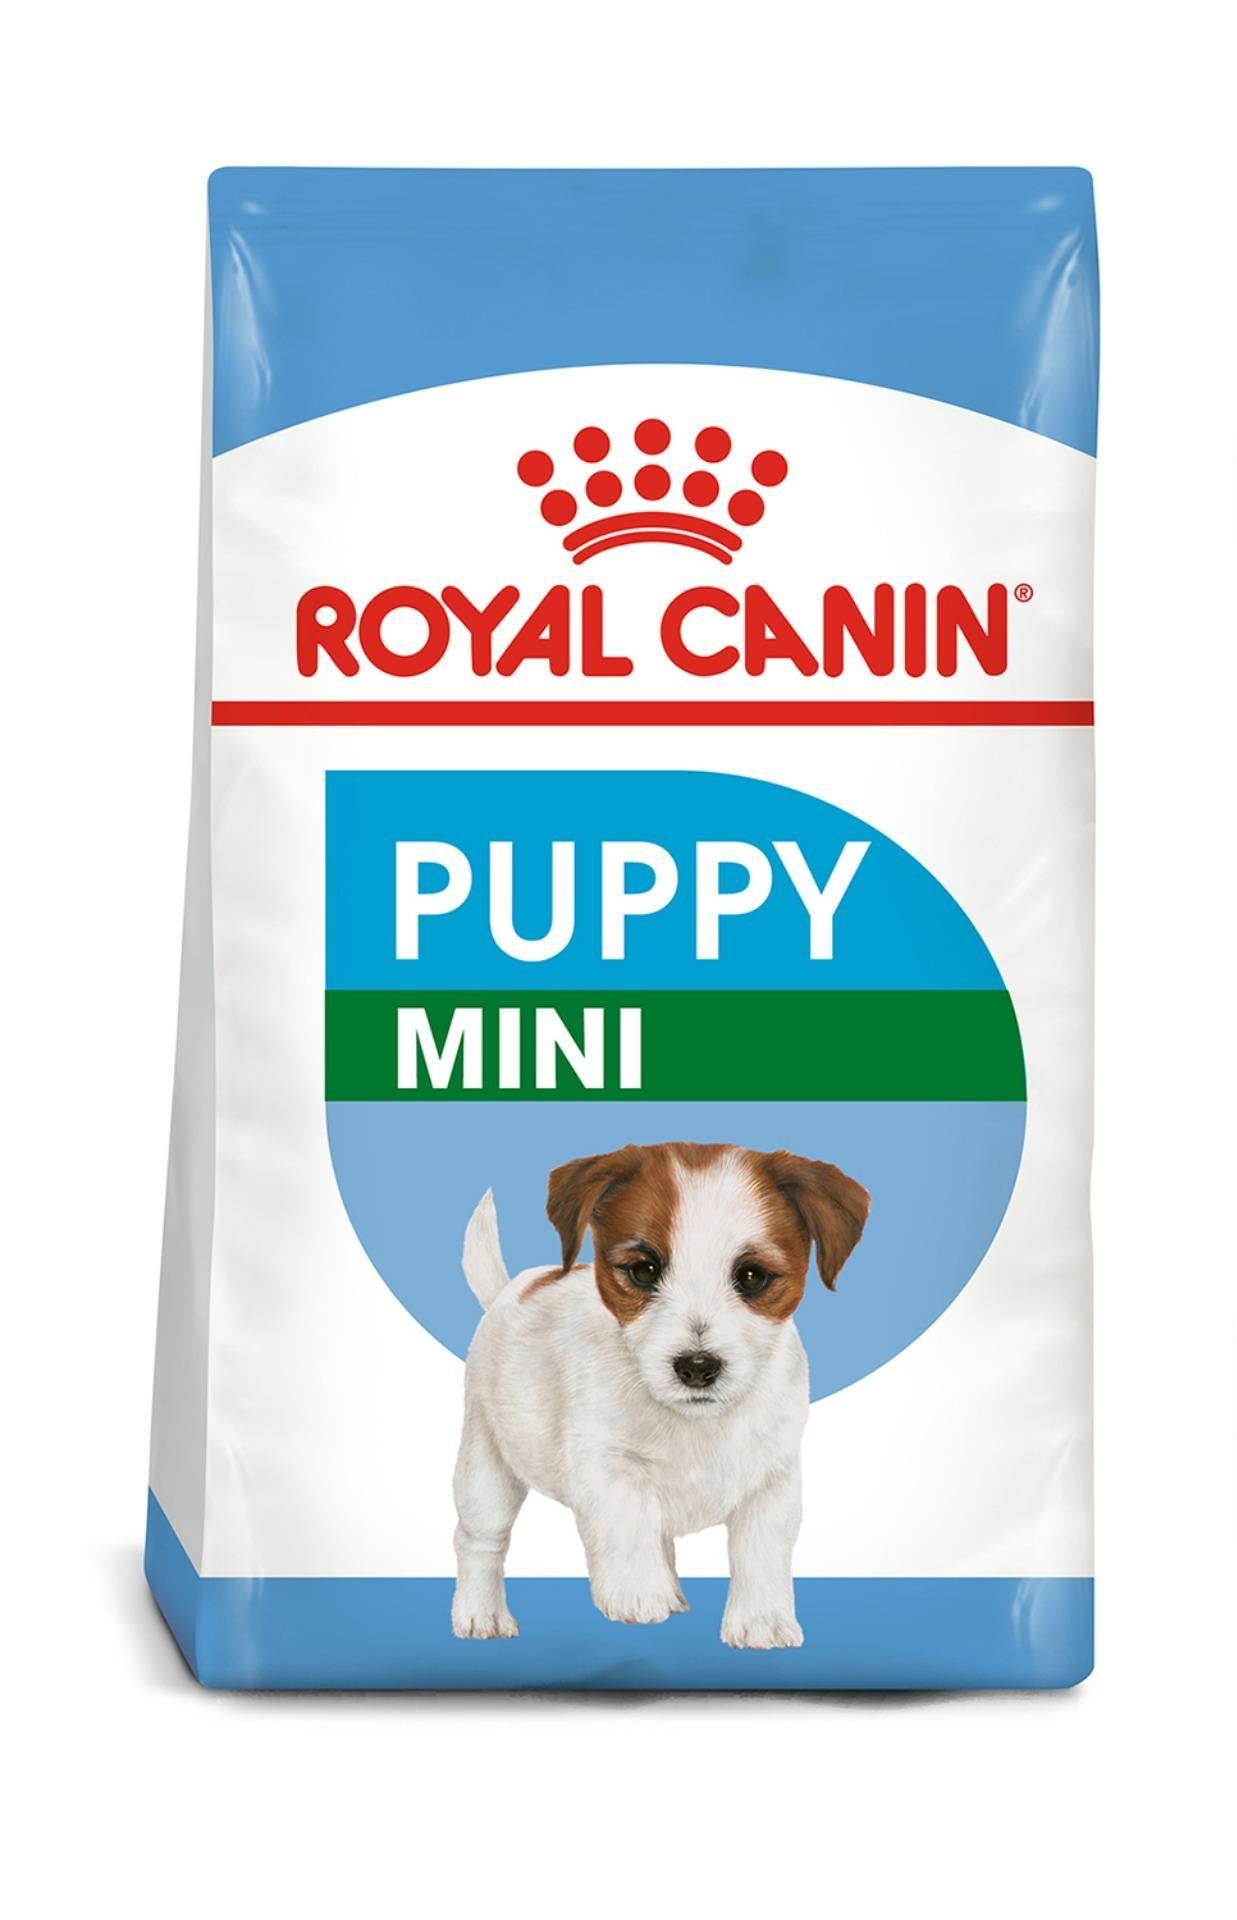 Royal Canin Puppy Mini Hrana za štence, 800g